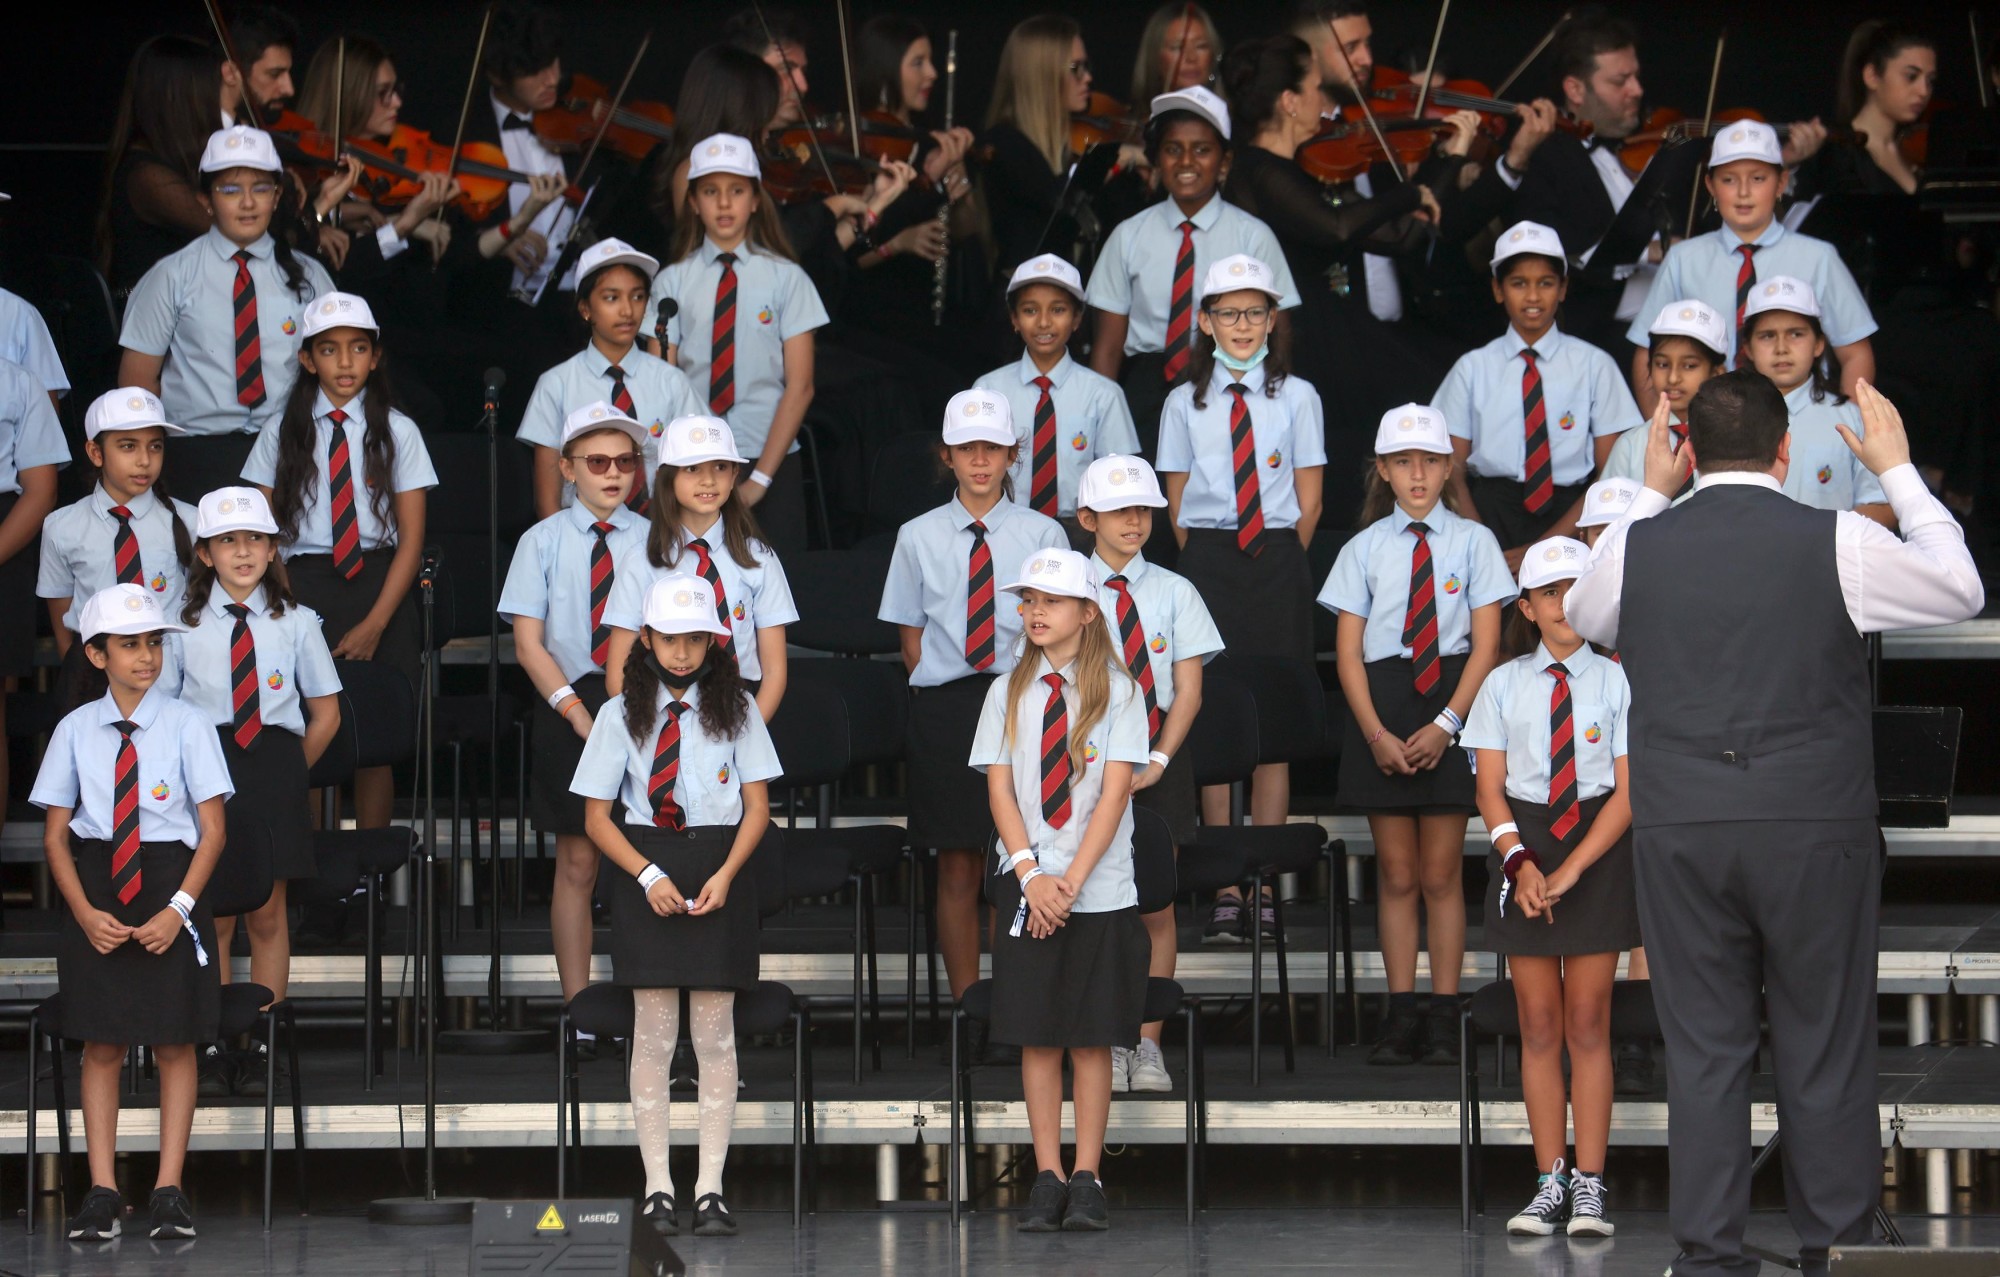 School choirs perform ‘Nasheed Al Wasl’ at Jubilee Stage m67147